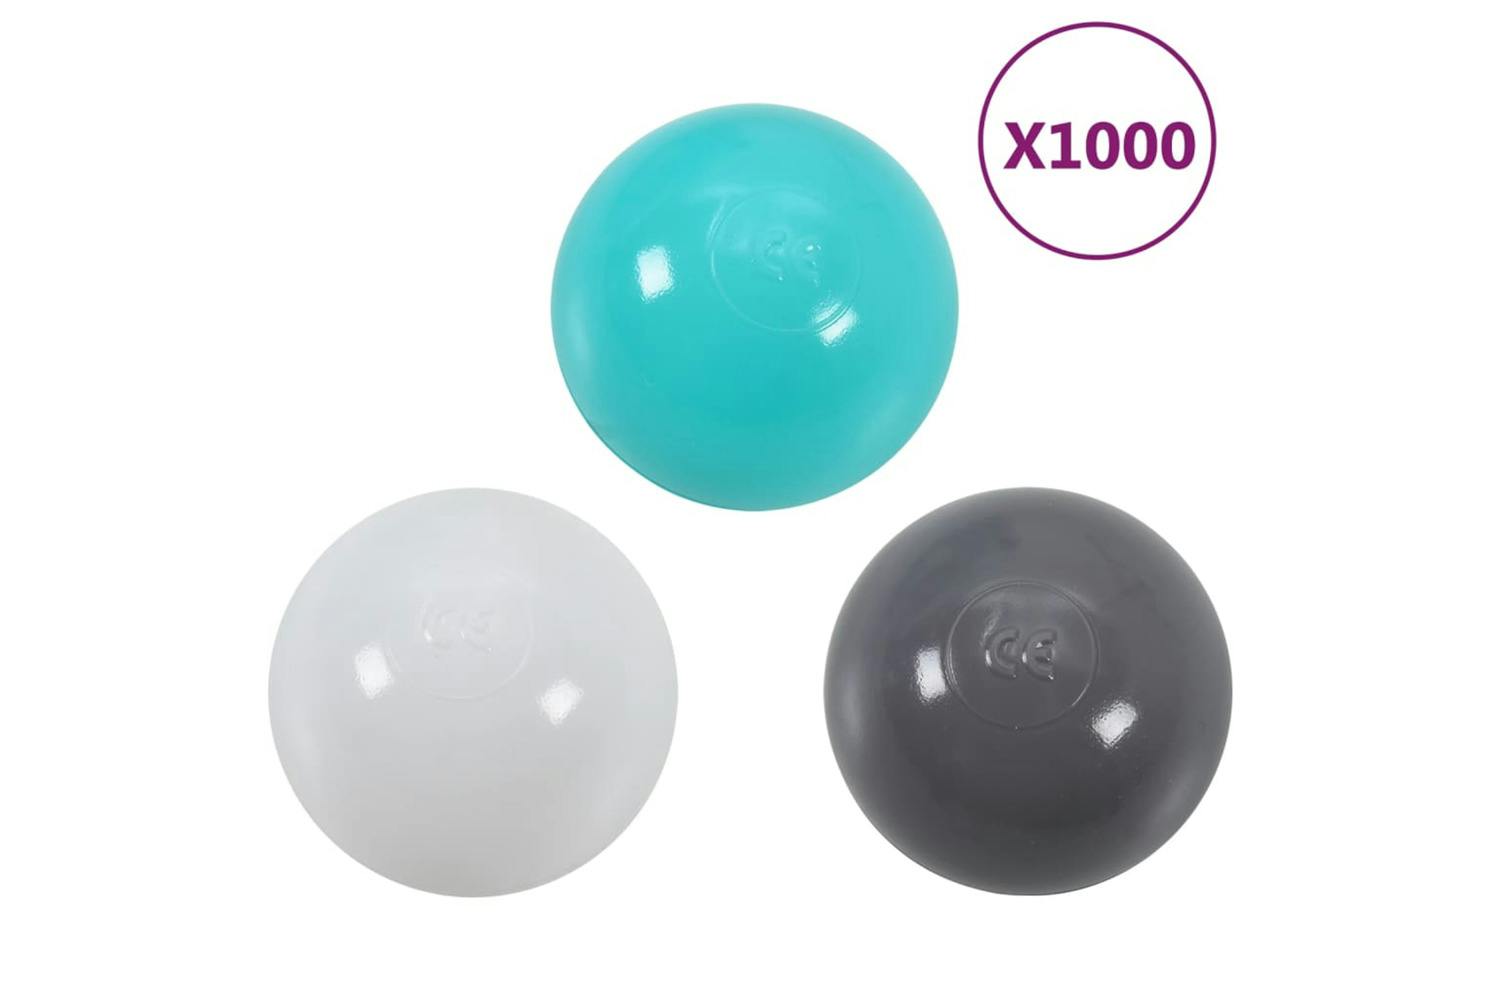 Vidaxl 3102954 Colourful Playballs For Baby Pool 1000 Pcs